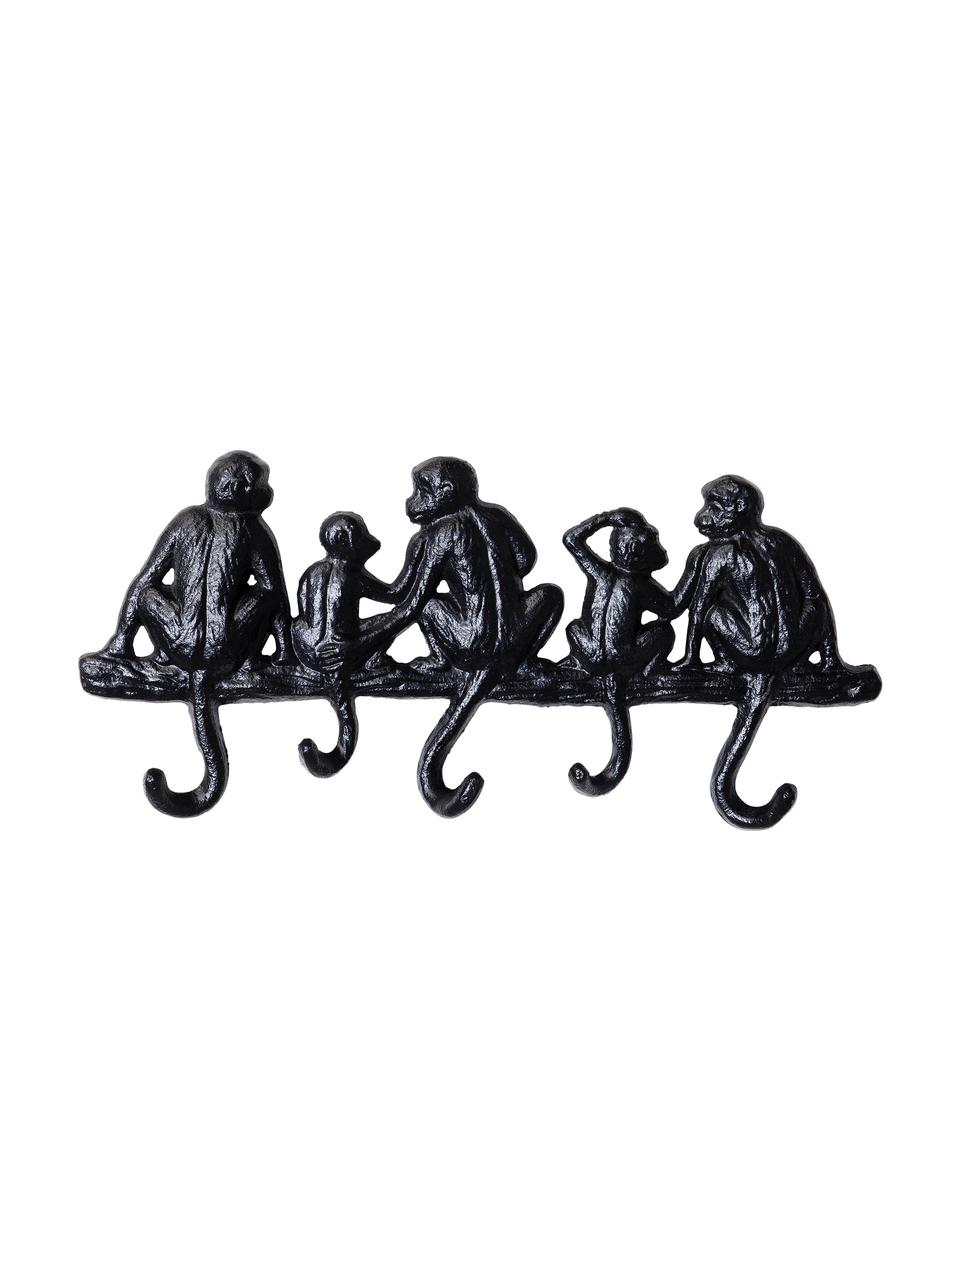 Malý černý nástěnný věšák Monkey, Kov s práškovým nástřikem, Černá, Š 31 cm, V 14 cm